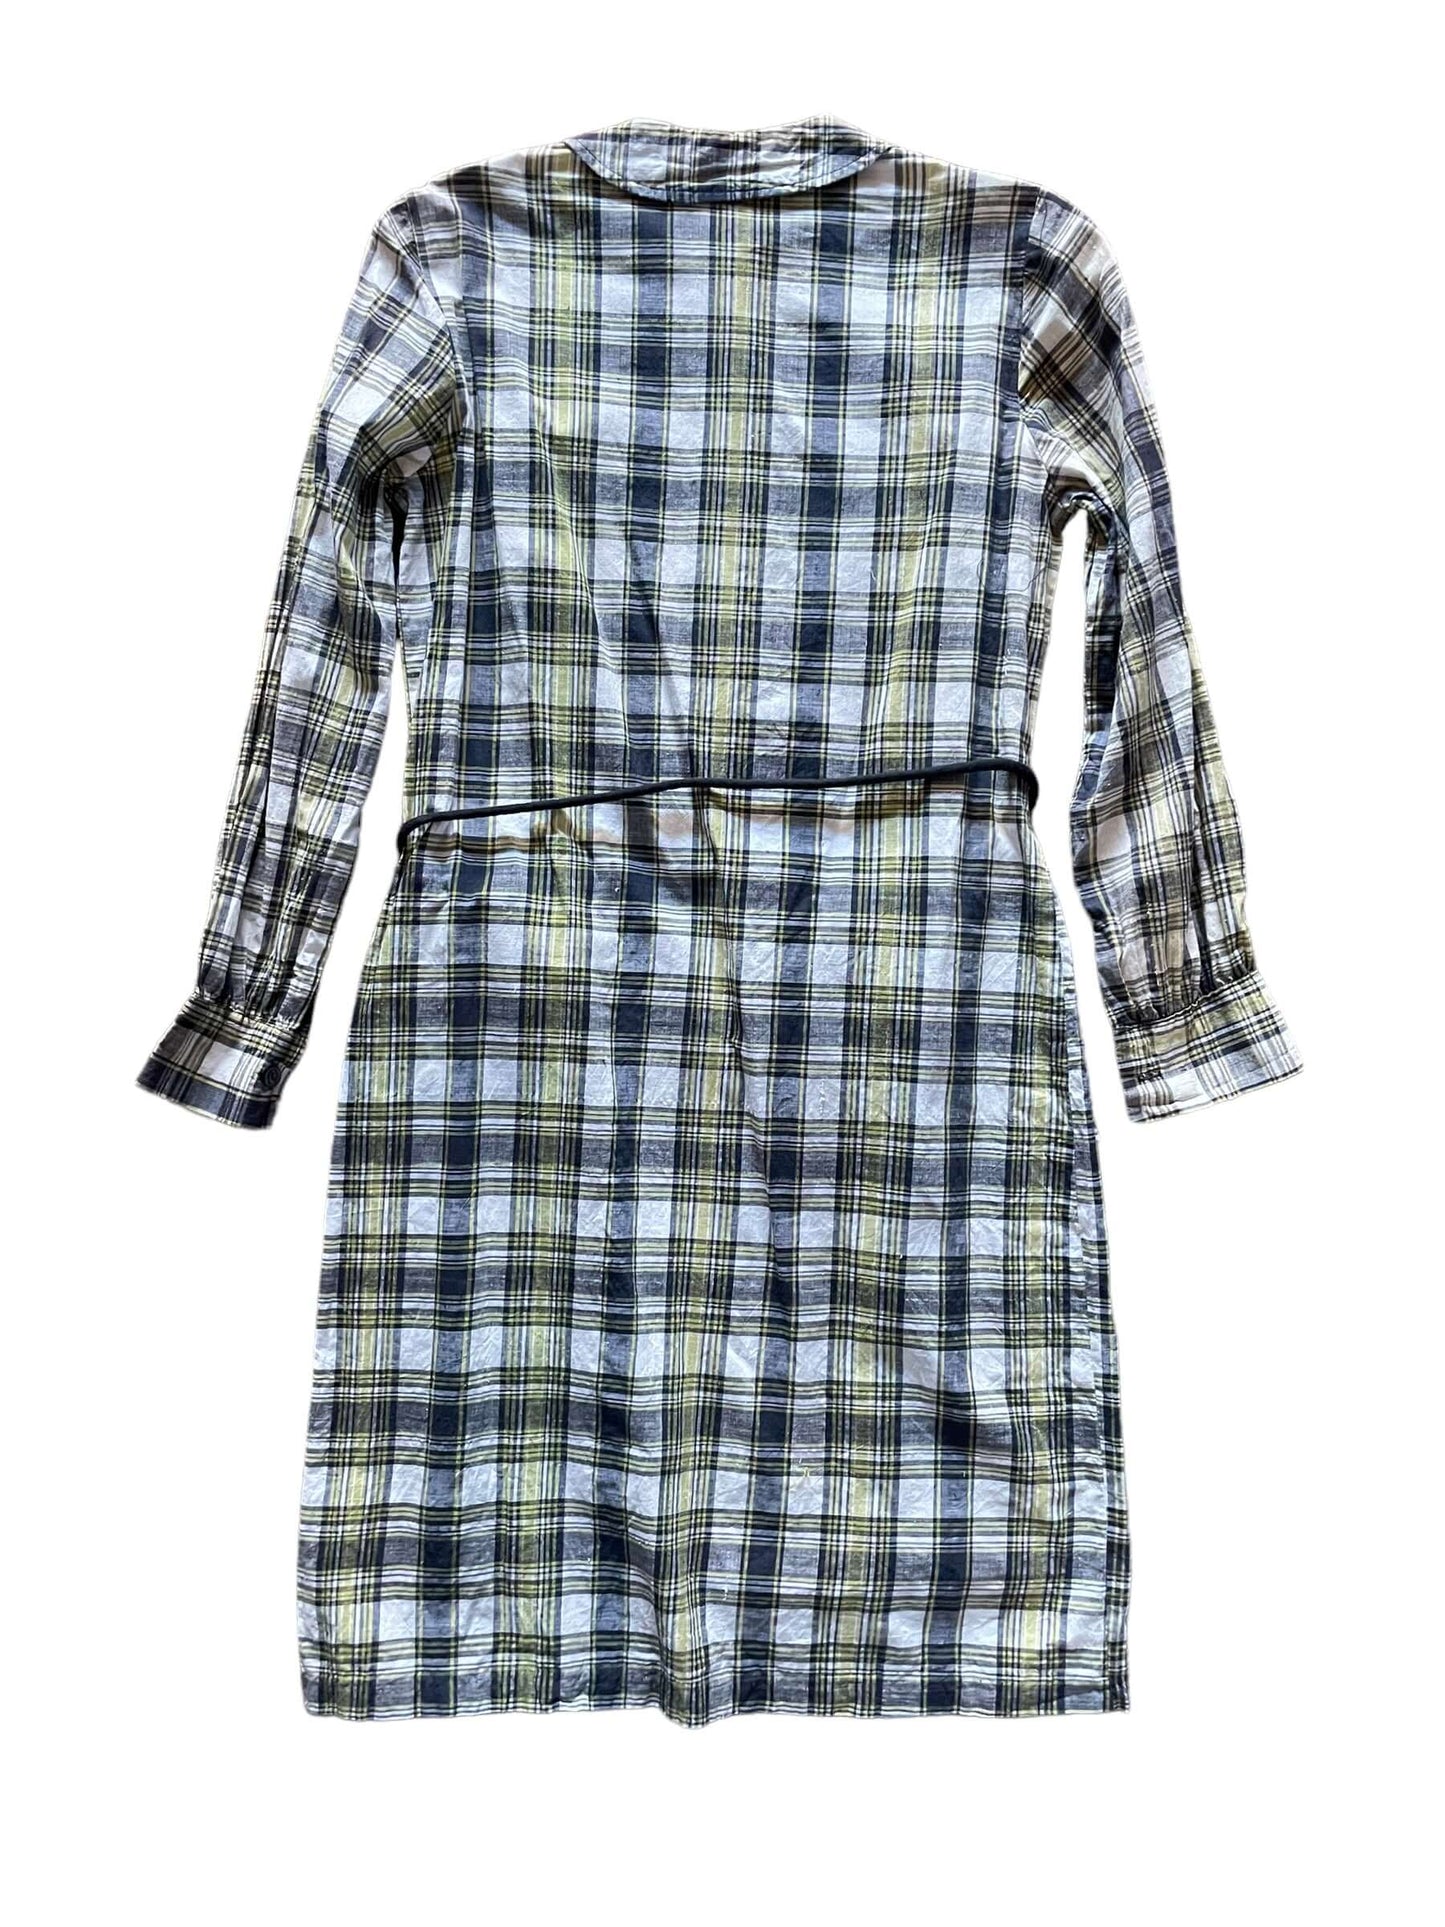 Full back view of Vintage 1960s Plaid Madras Shirt Dress | Seattle True Vintage | Barn Owl Ladies Clothing